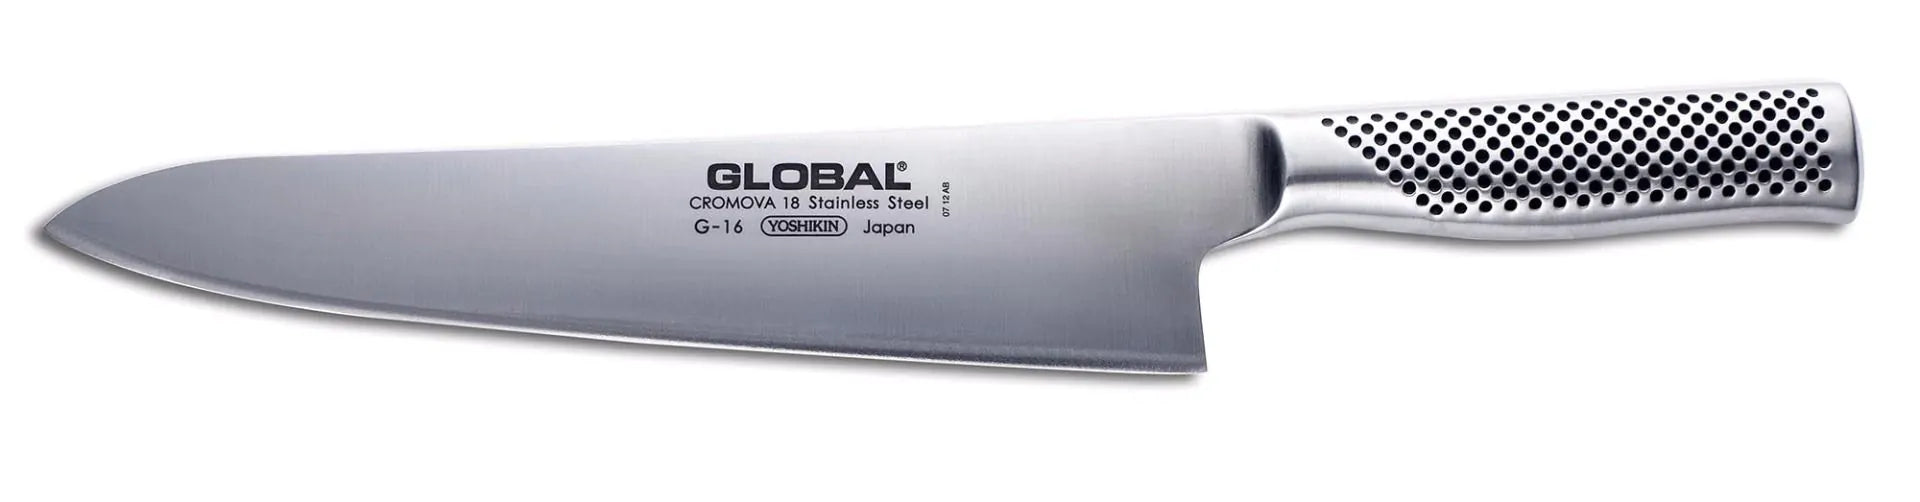 Global Classic 10-inch Chef's Knife, G-16